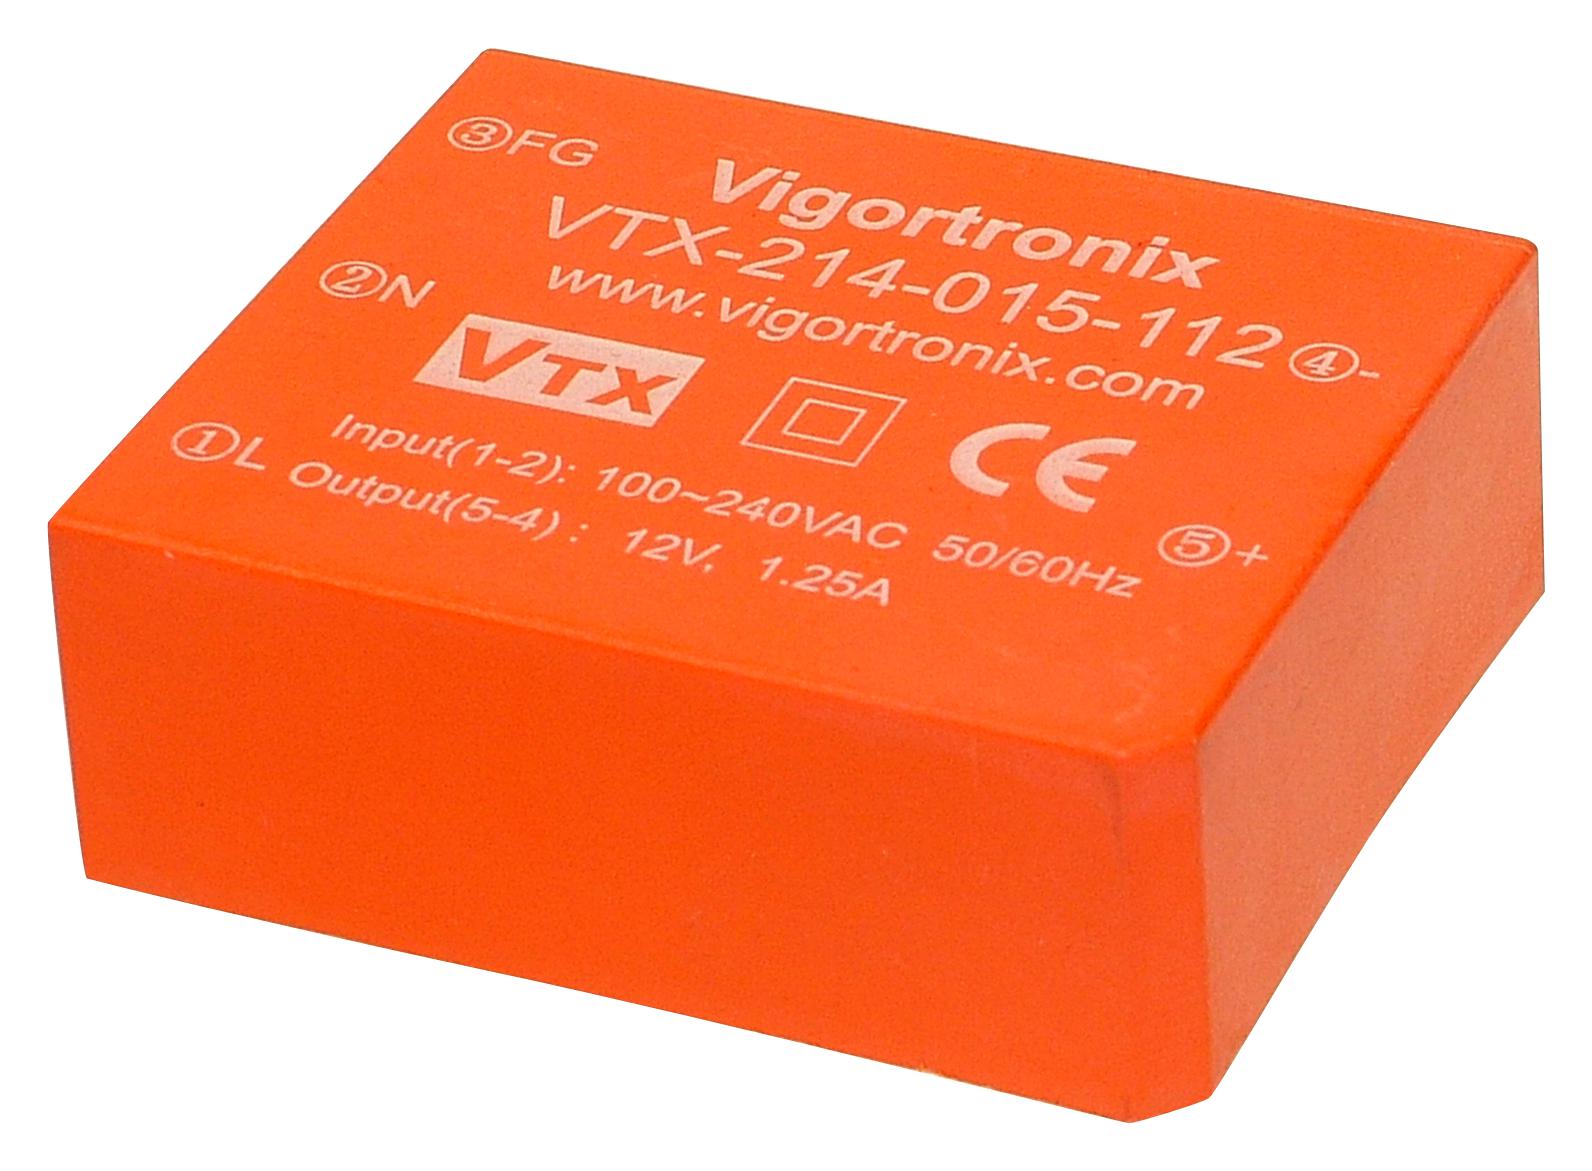 VTX-214-015-148 POWER SUPPLY, AC-DC, 48V, 0.315A VIGORTRONIX